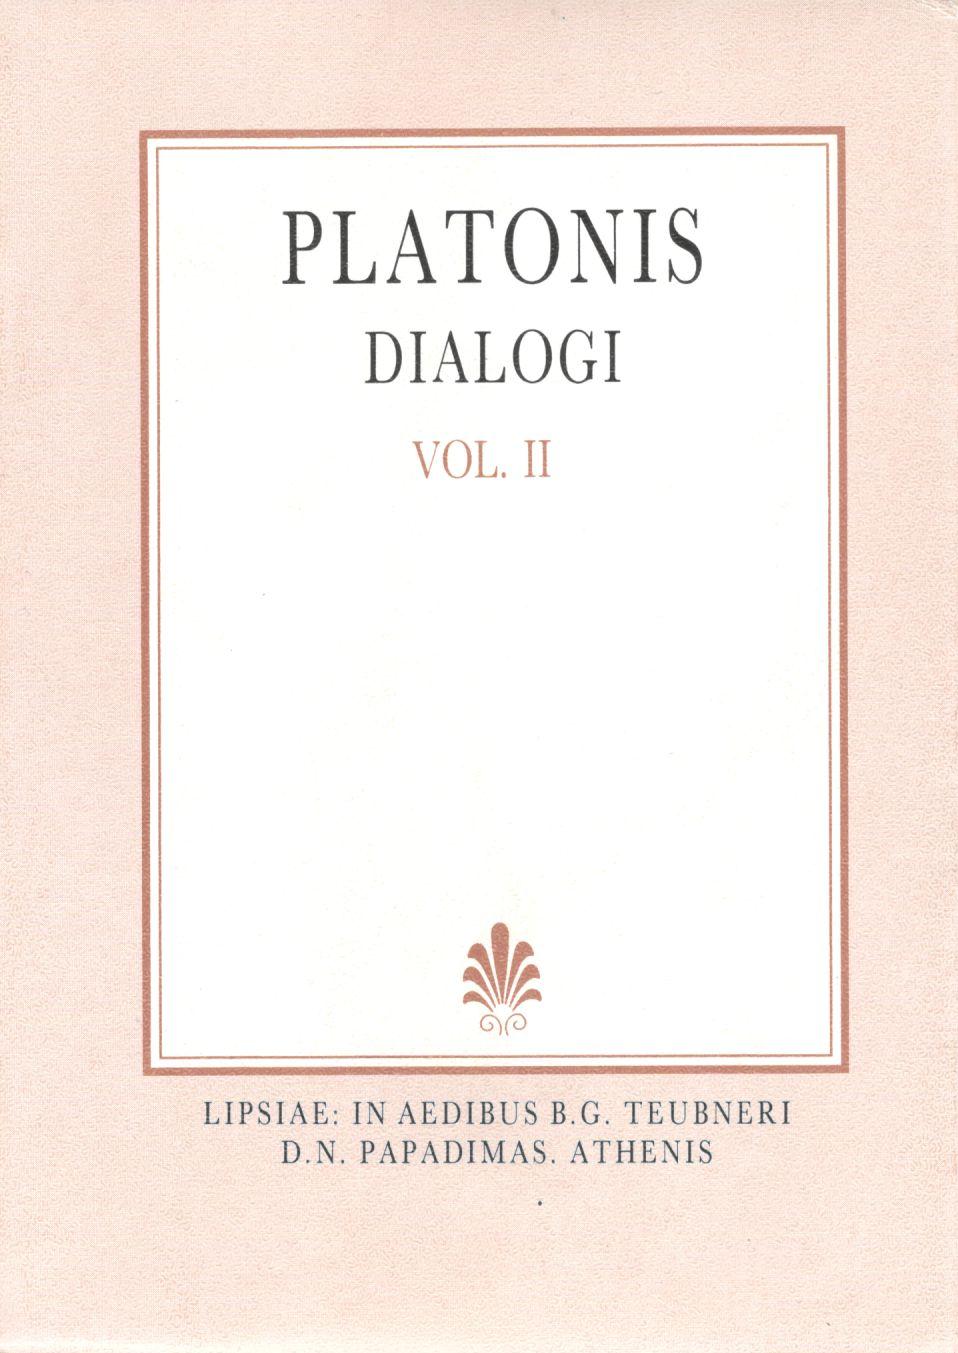 Platonis, Dialogi, Vol. II, [Πλάτωνος, Διάλογοι, τ. Β']